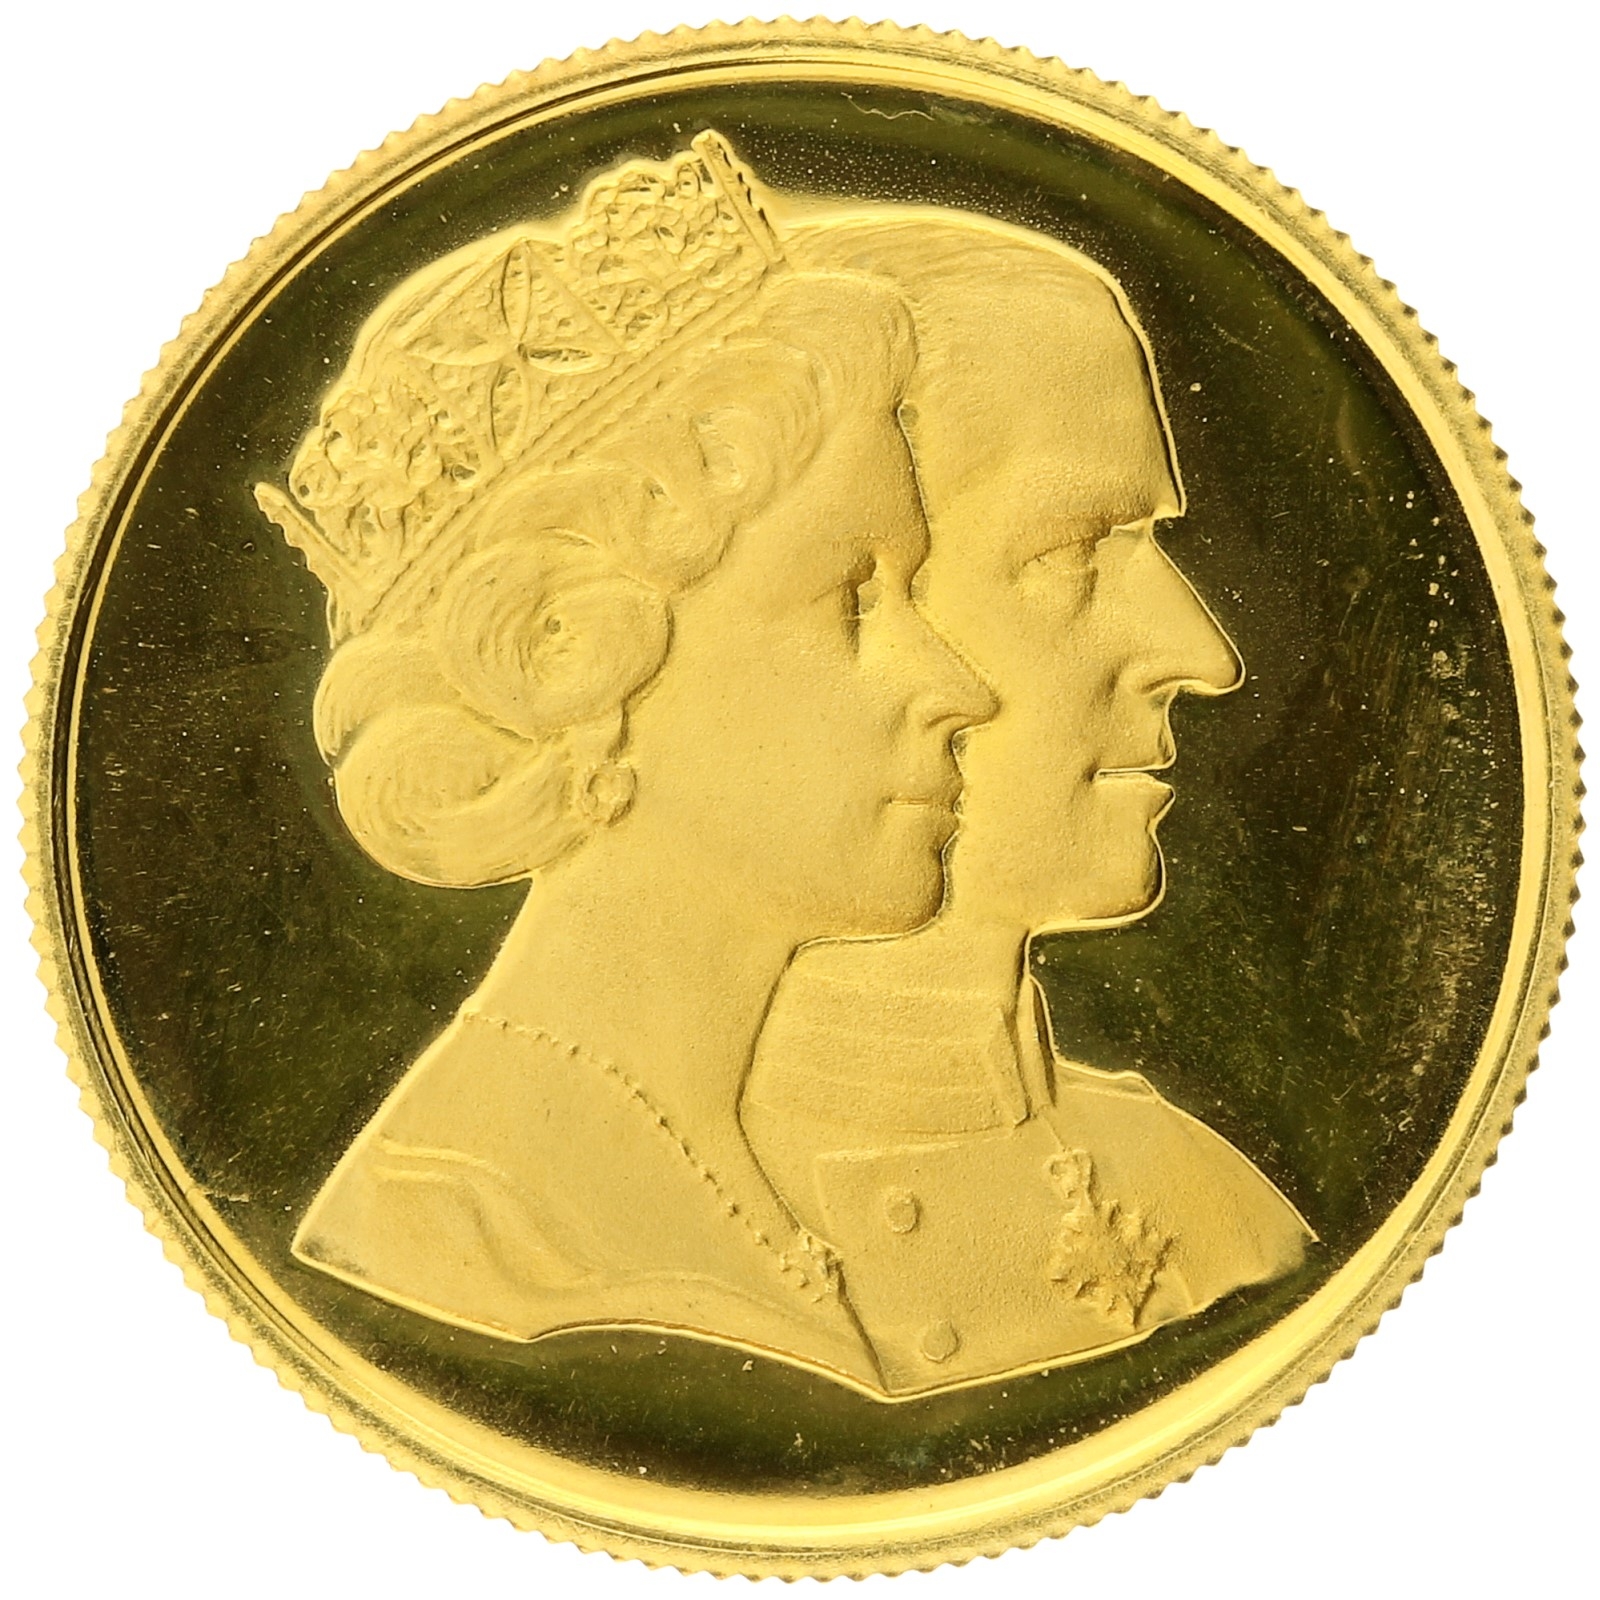 Denmark - Buckingham Palace - ND (ca. 1975) - Medal (ducat)